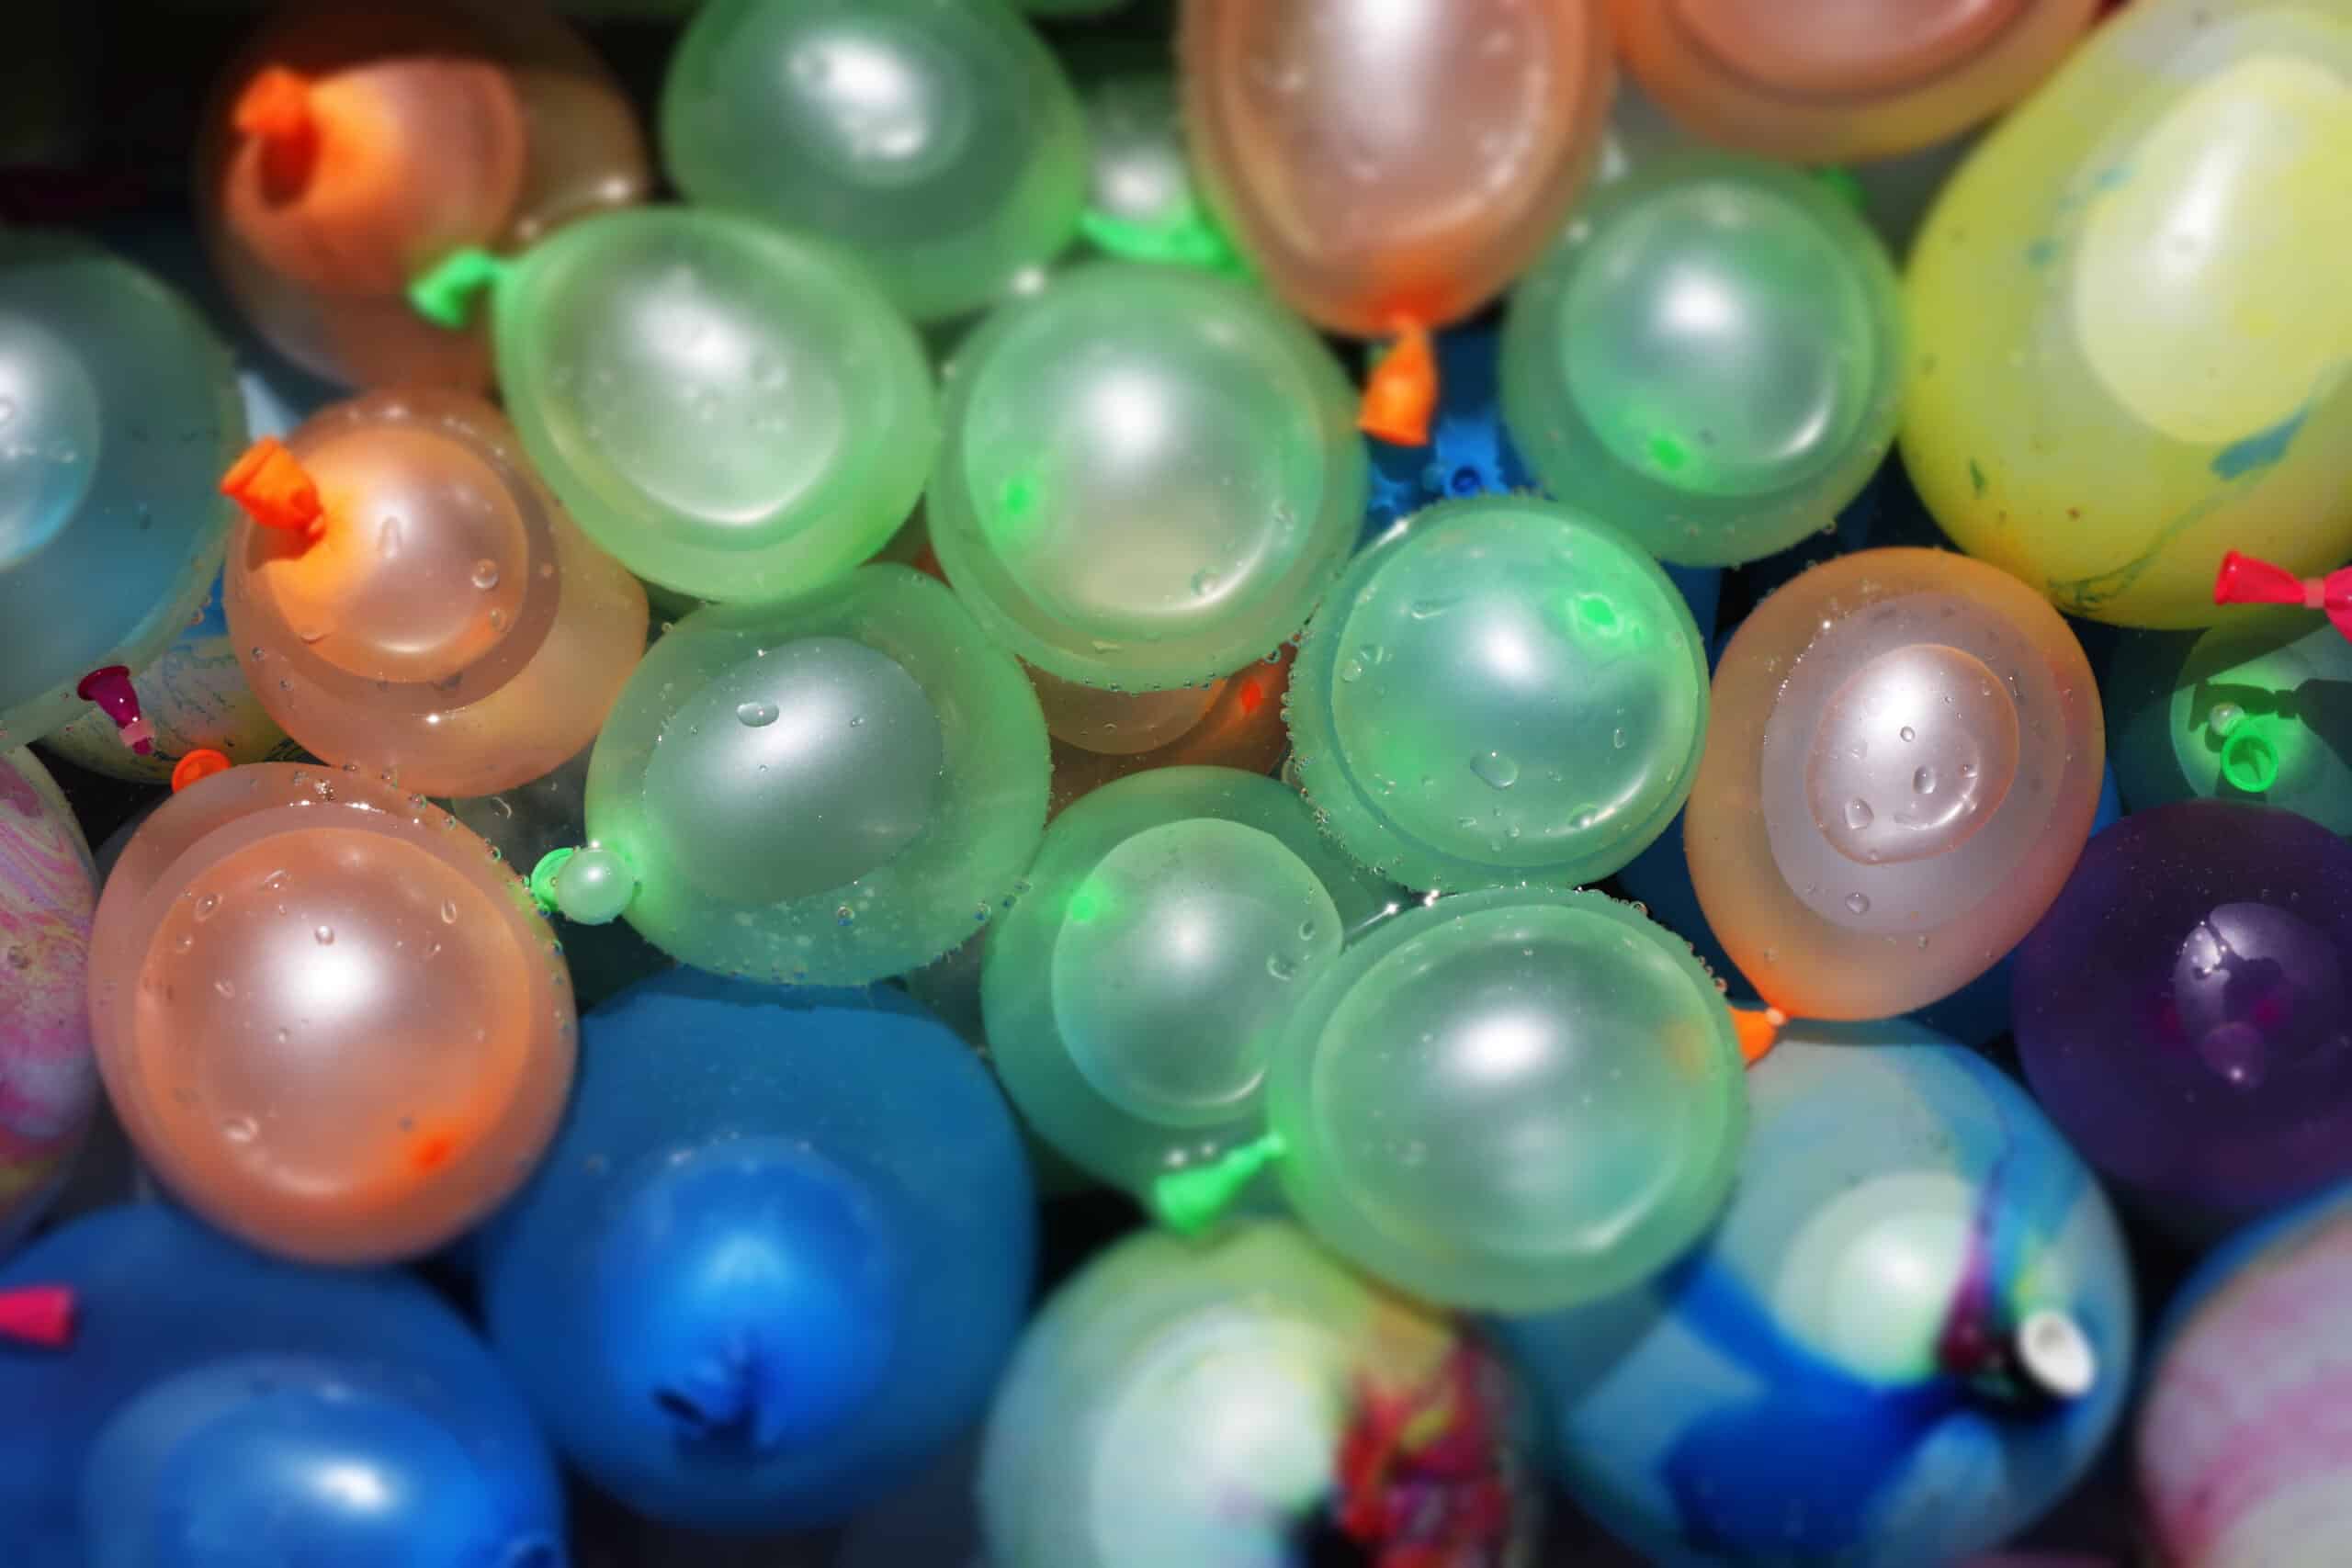 Balloons soaking in water